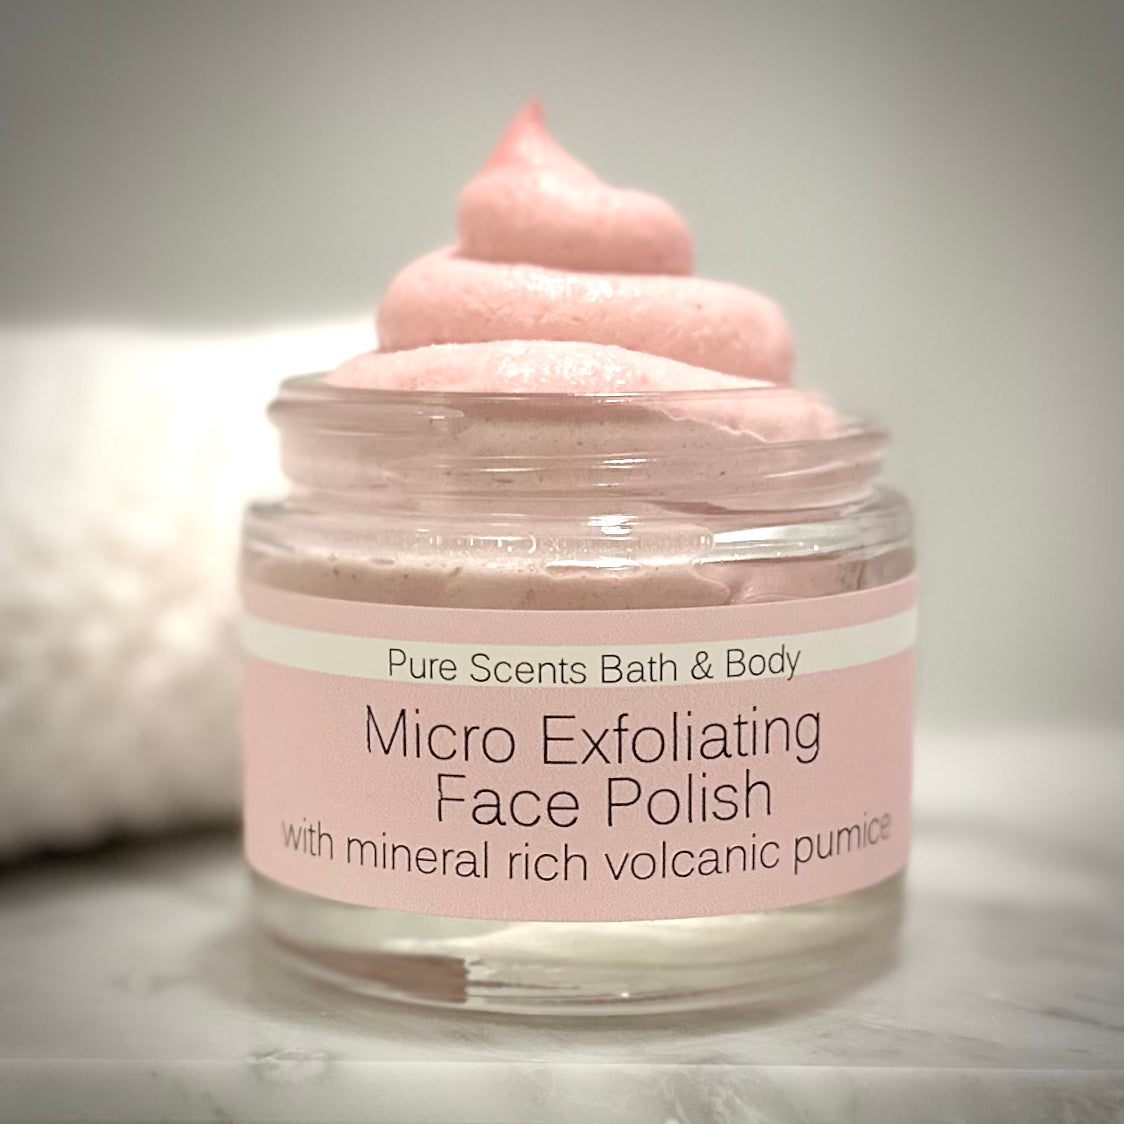 Micro Exfoliating Face Polish